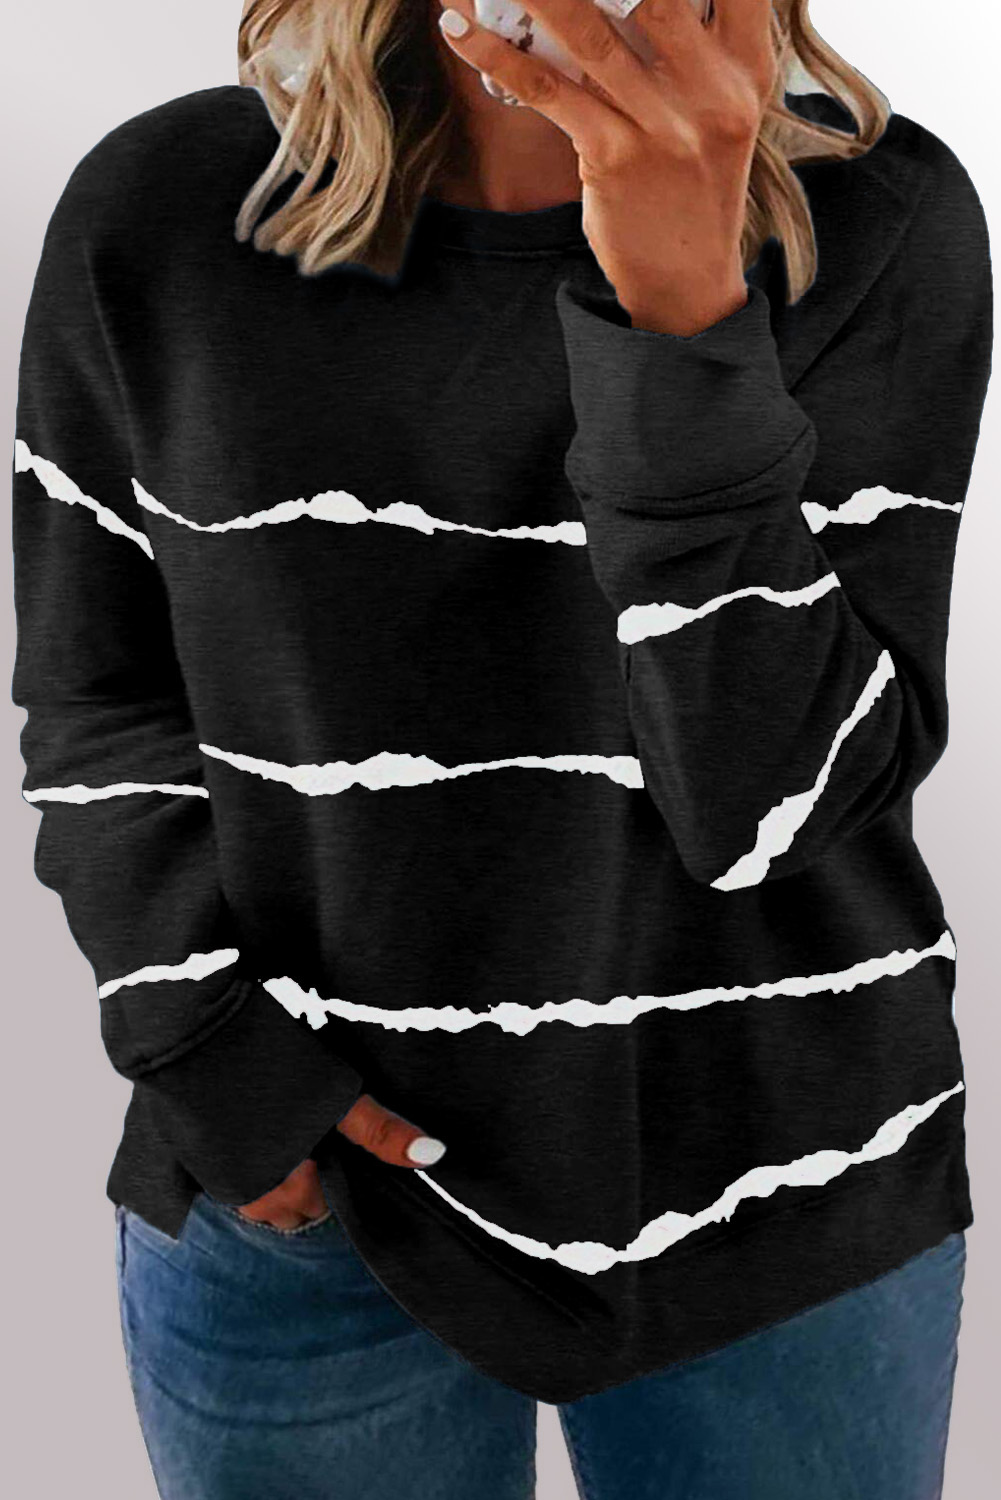 US$ 8.51 Drop-shipping Black Tie-dye Stripes Plus Size Sweatshirt for Women